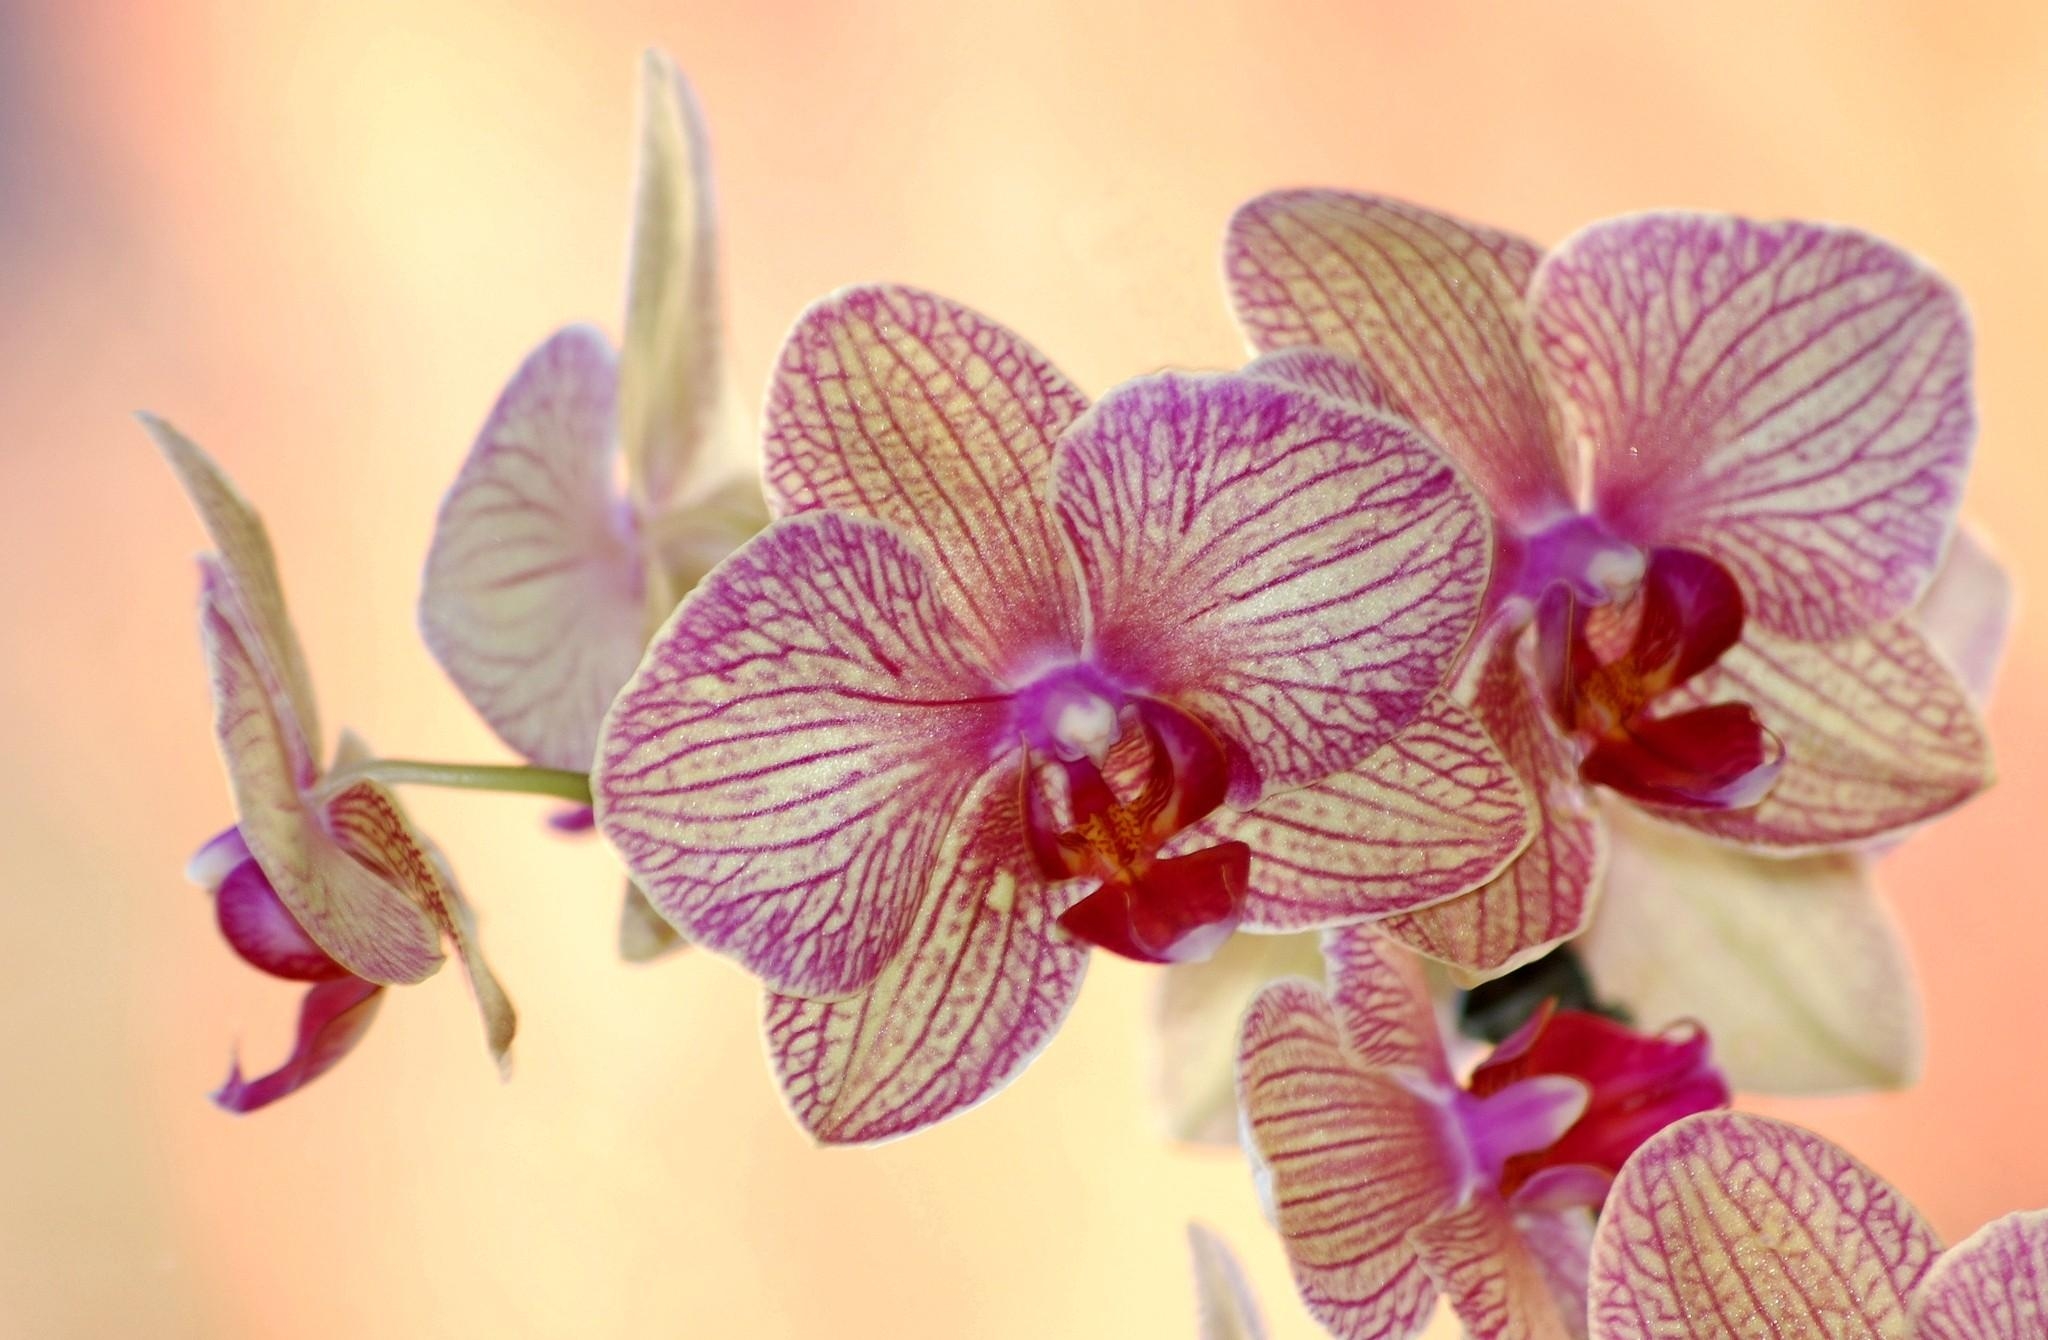 59454 descargar imagen orquídea, flores, flor, rayas, rayado, exótico, exóticos: fondos de pantalla y protectores de pantalla gratis